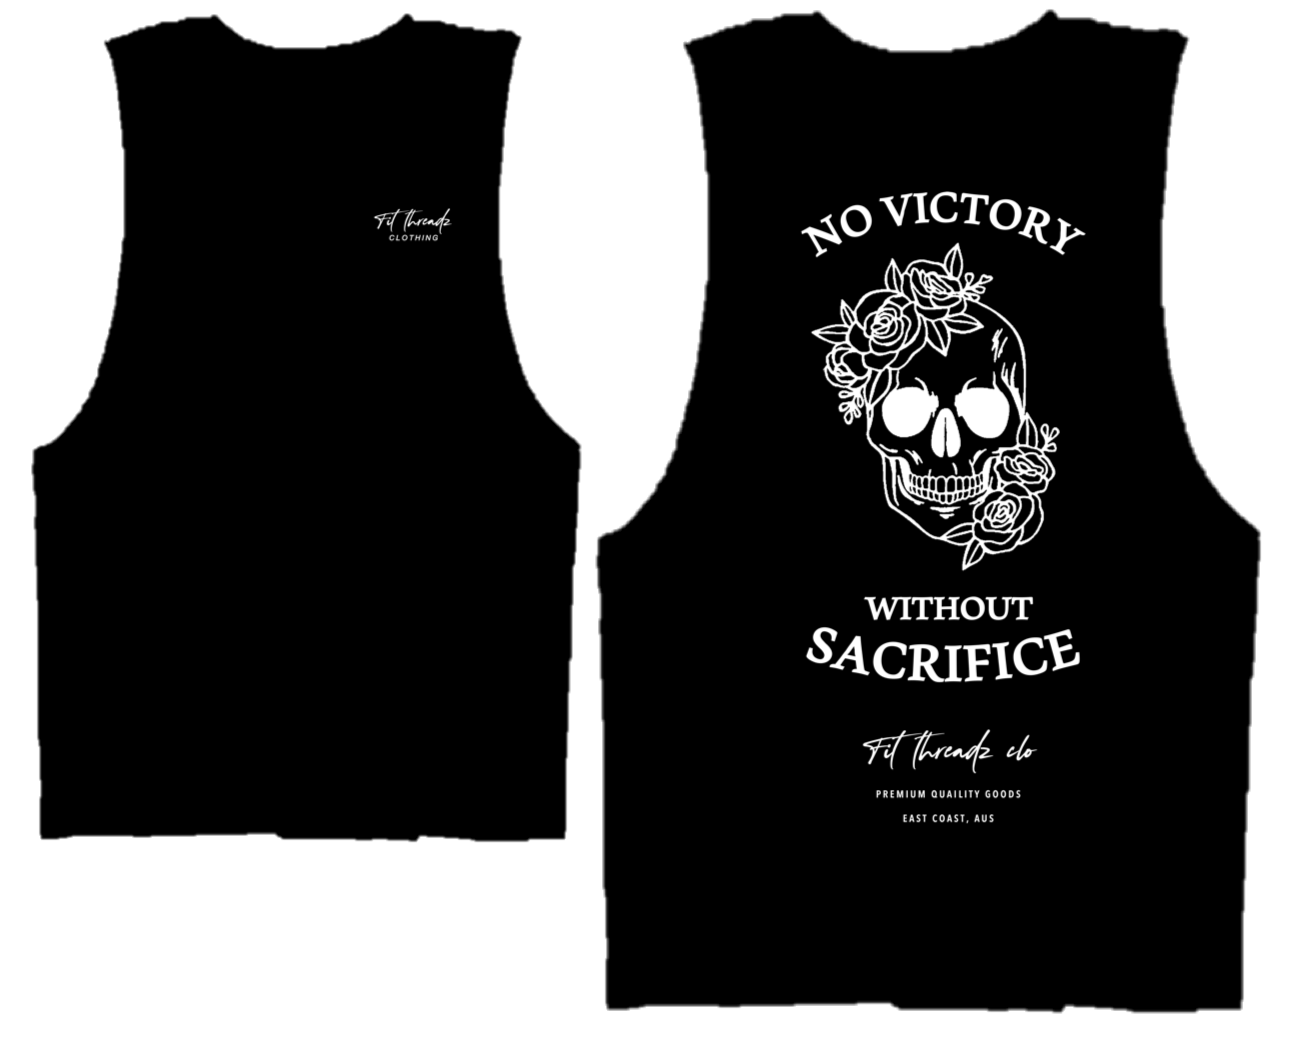 NO VICTORY WITHOUT SACRIFICE